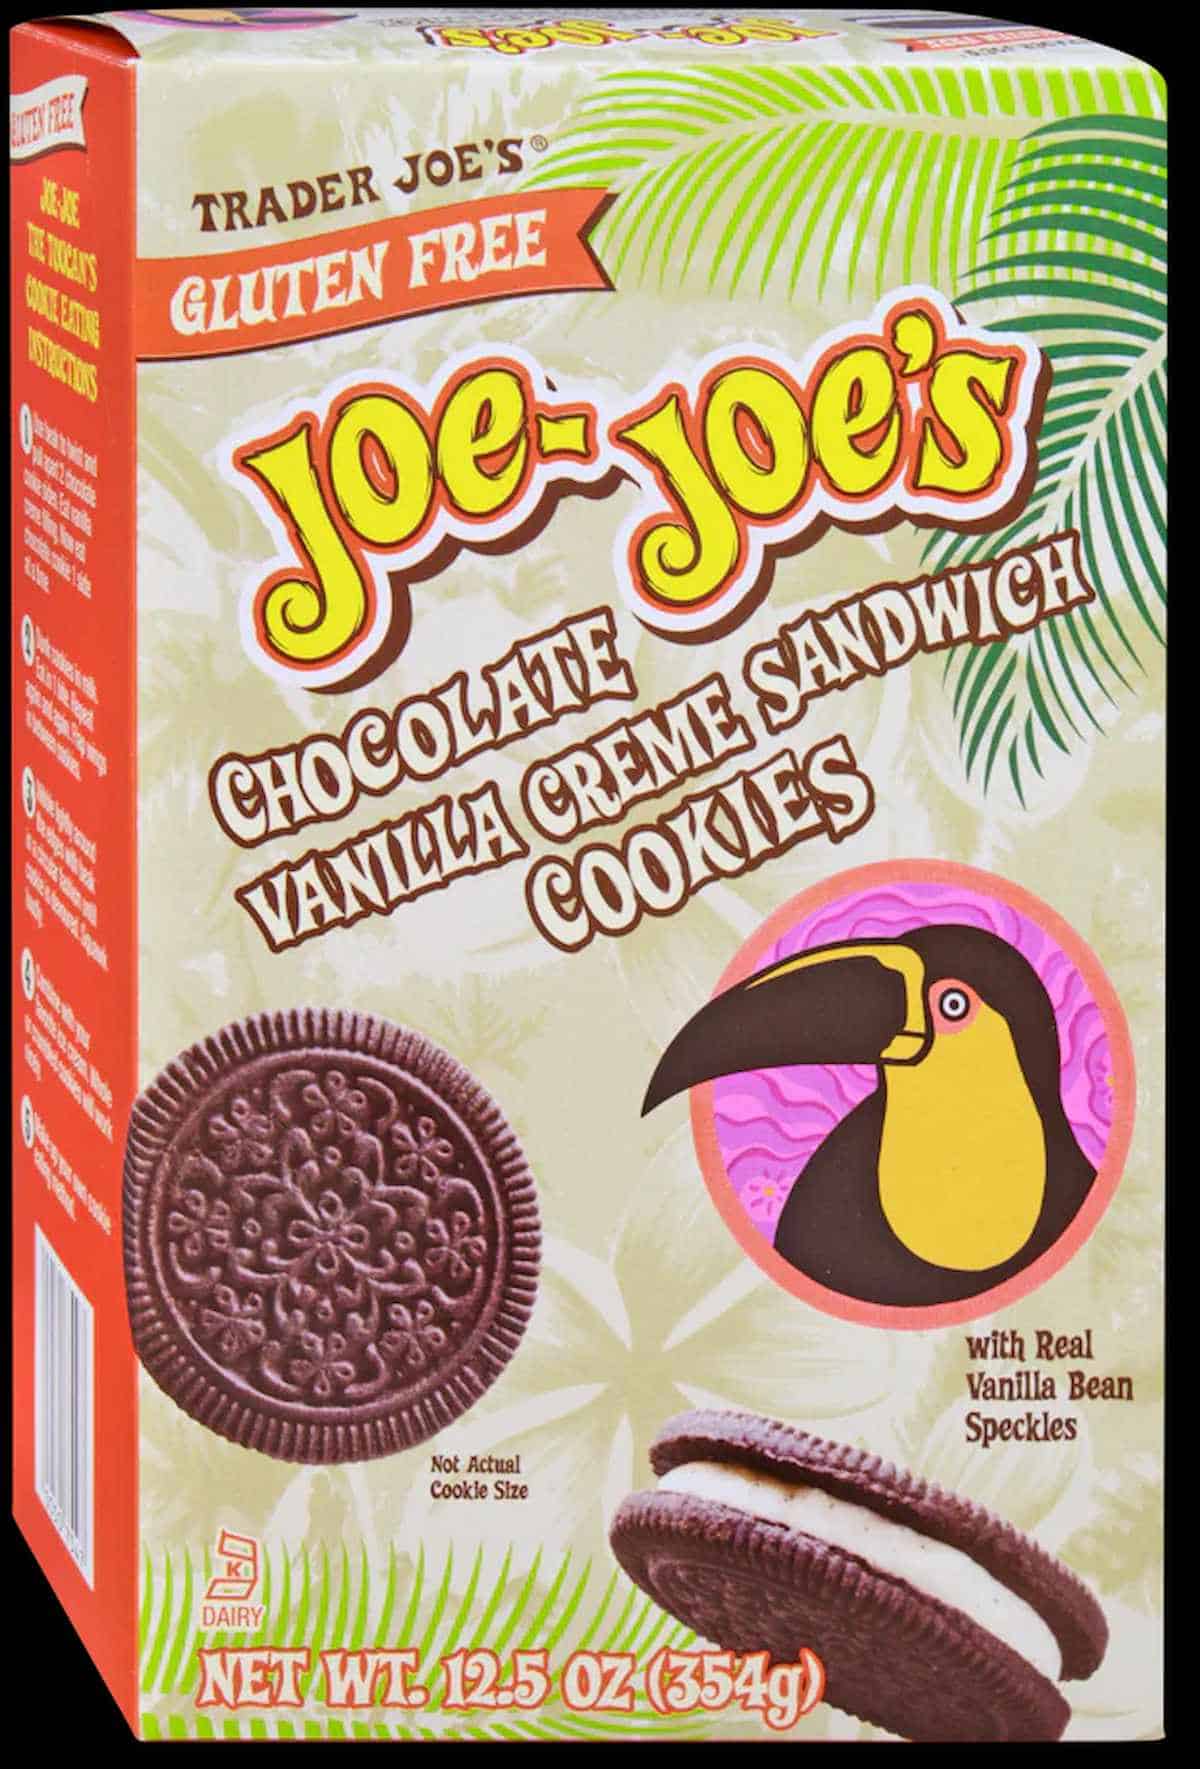 A box of Trader Joe's Joe-Joe's cookies.